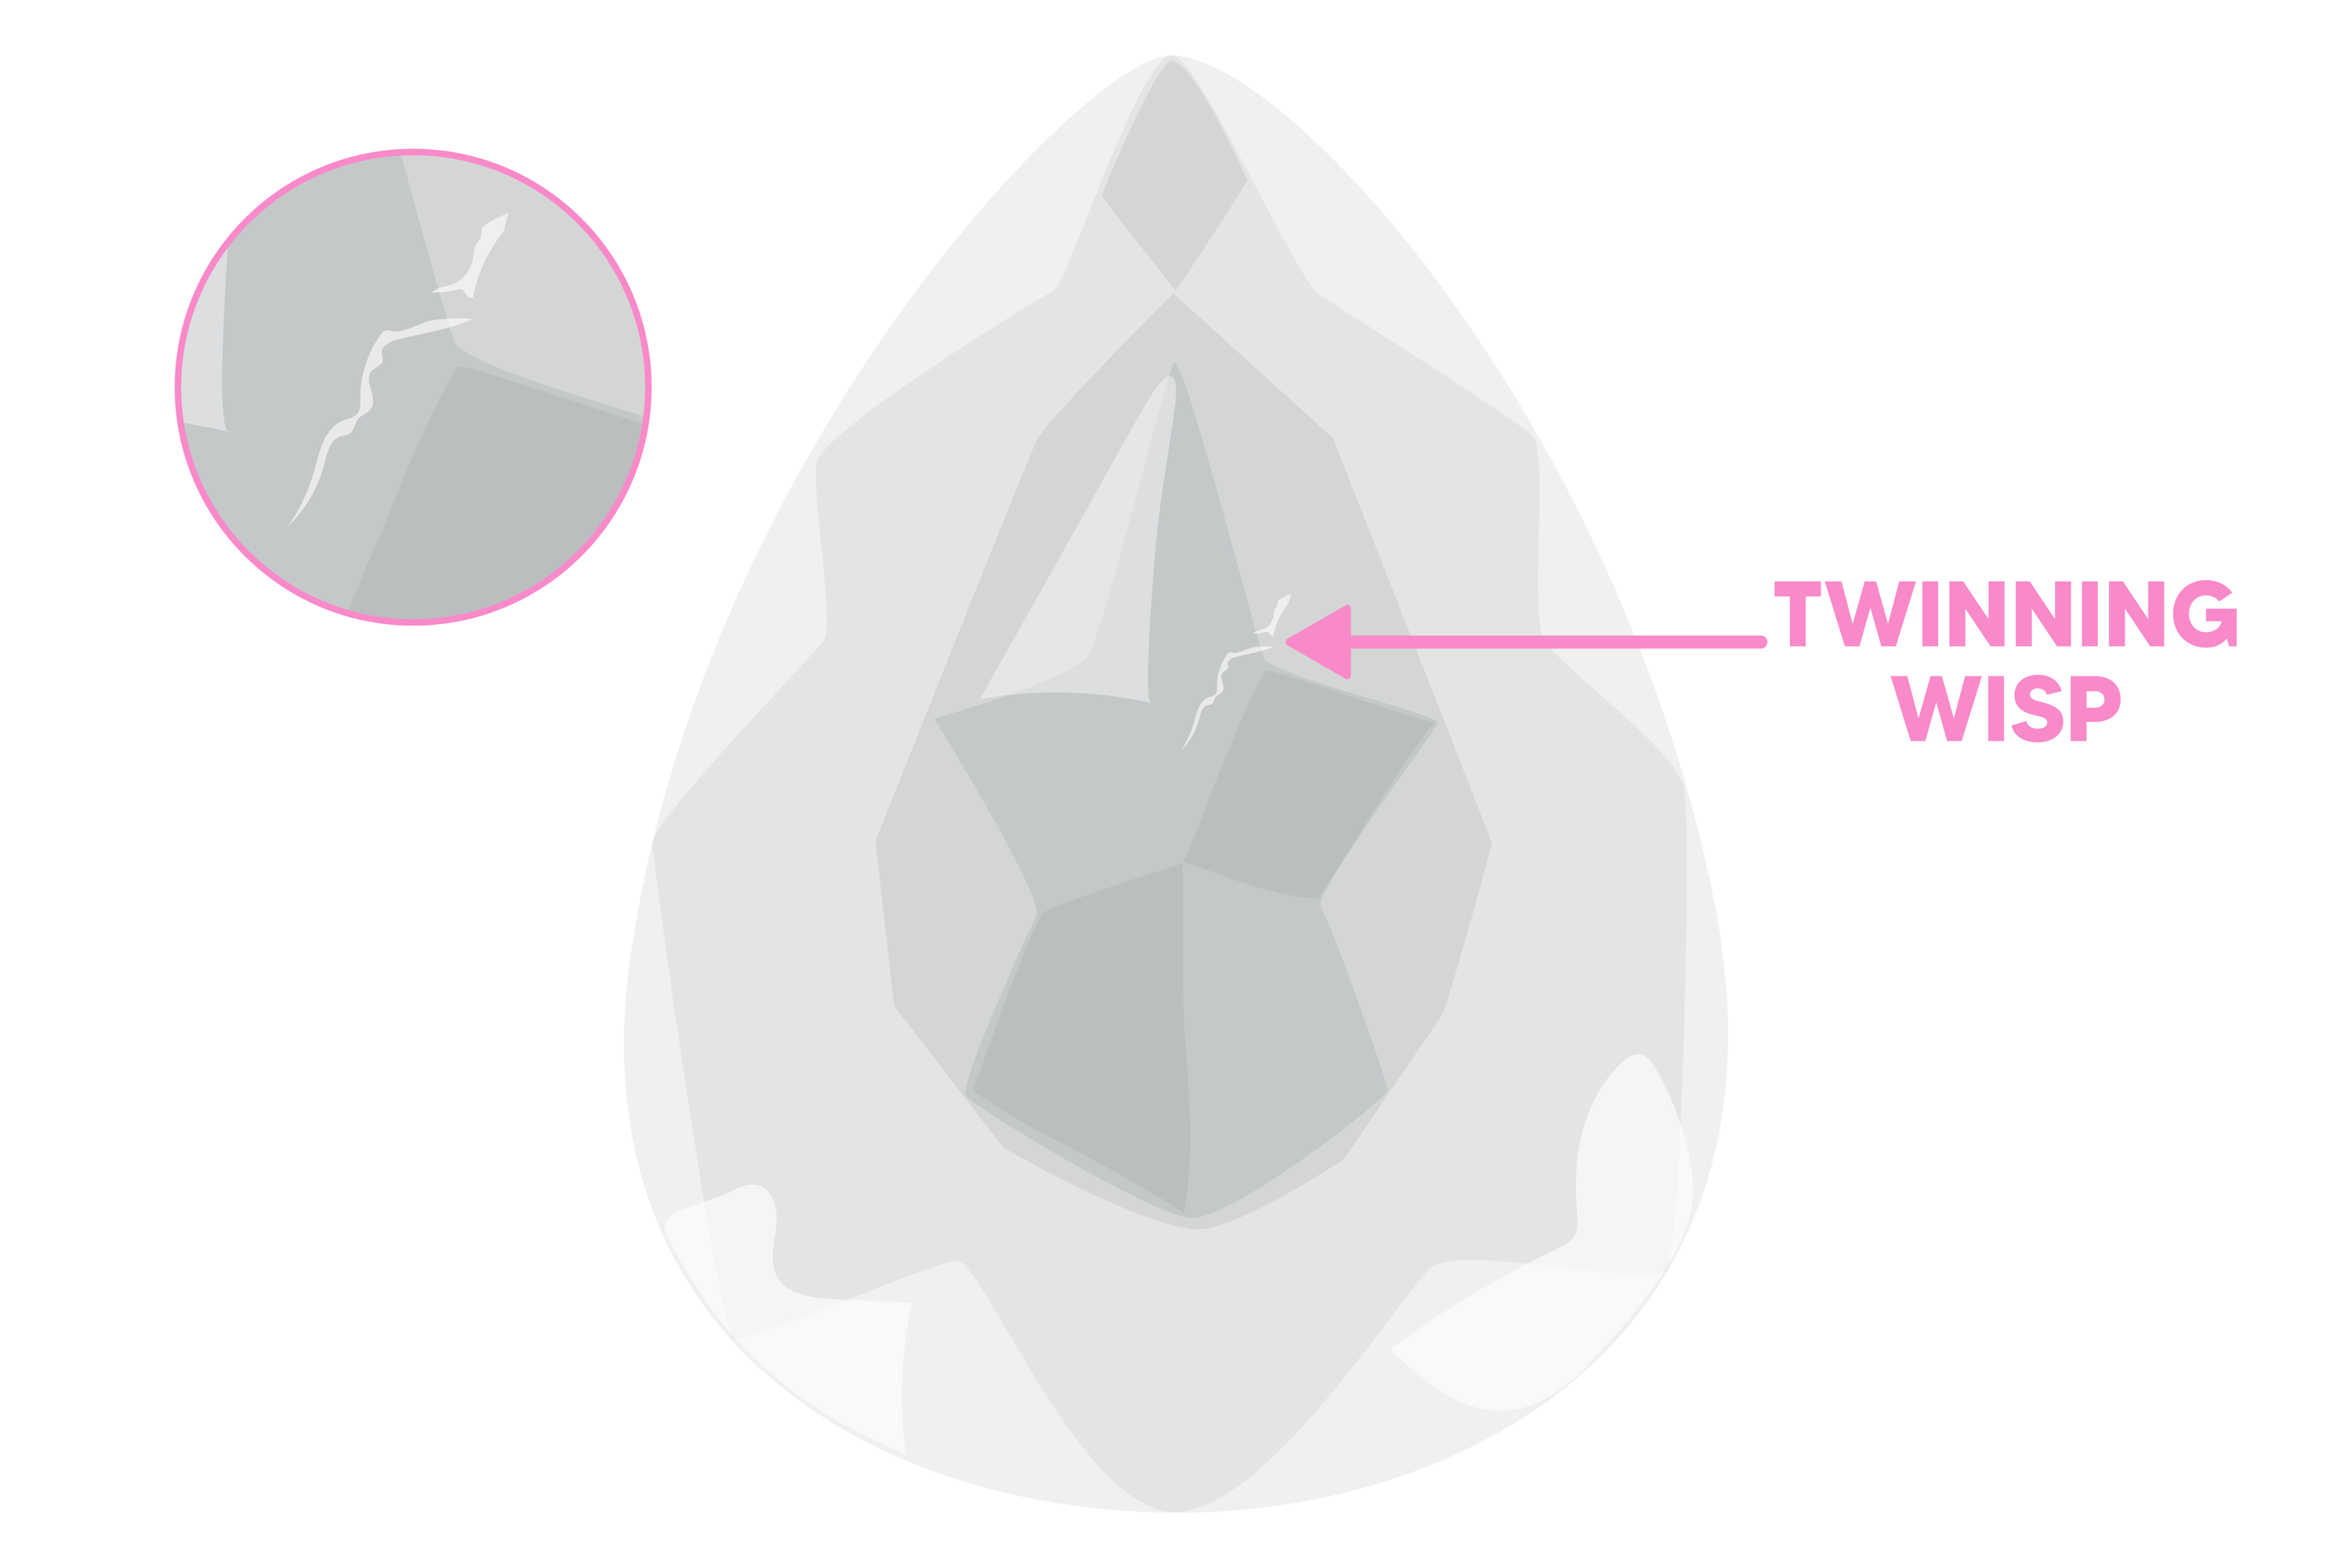 Twinning wisp diamond inclusion